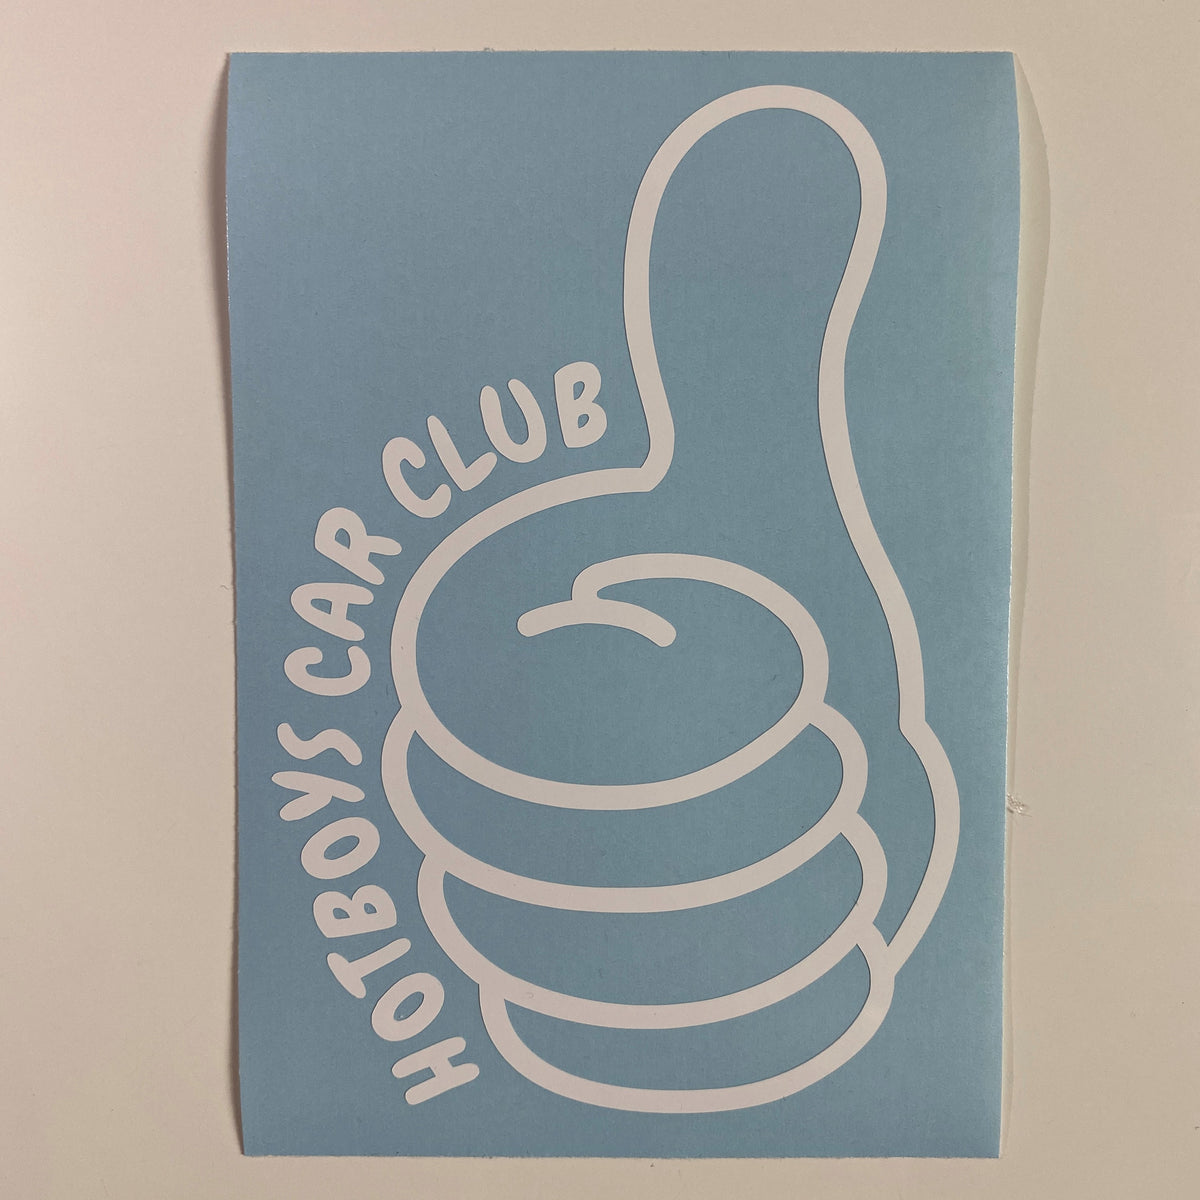 Hotboys Car Club Thumbs Up Decal Sticker